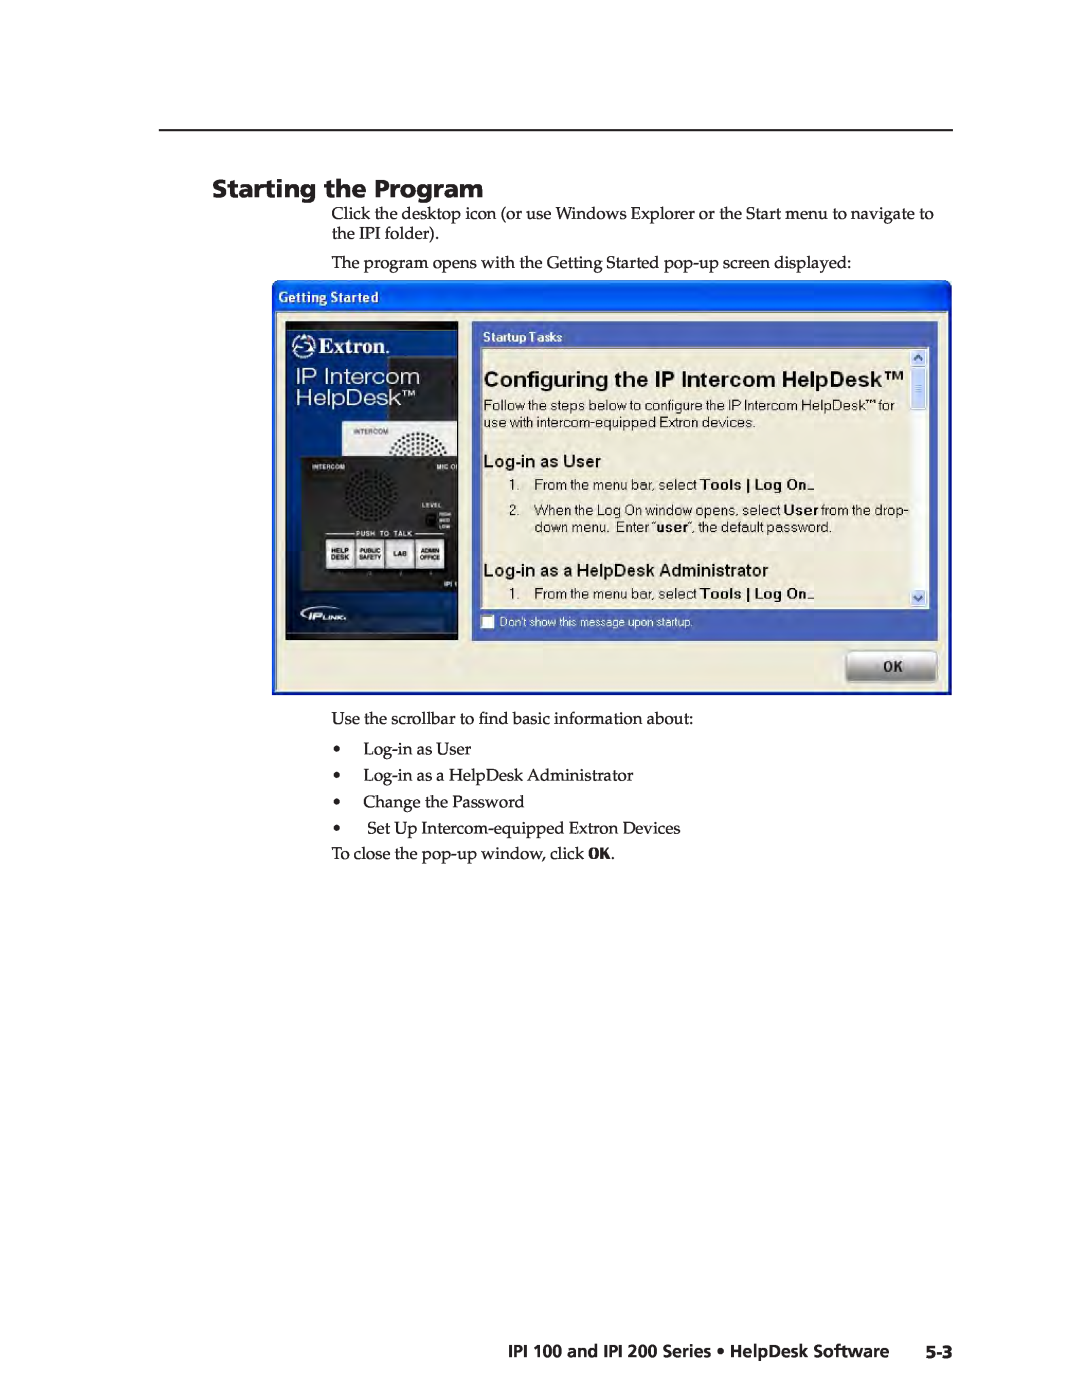 Extron electronic manual Starting the Program, IPI 100 and IPI 200 Series HelpDesk Software 